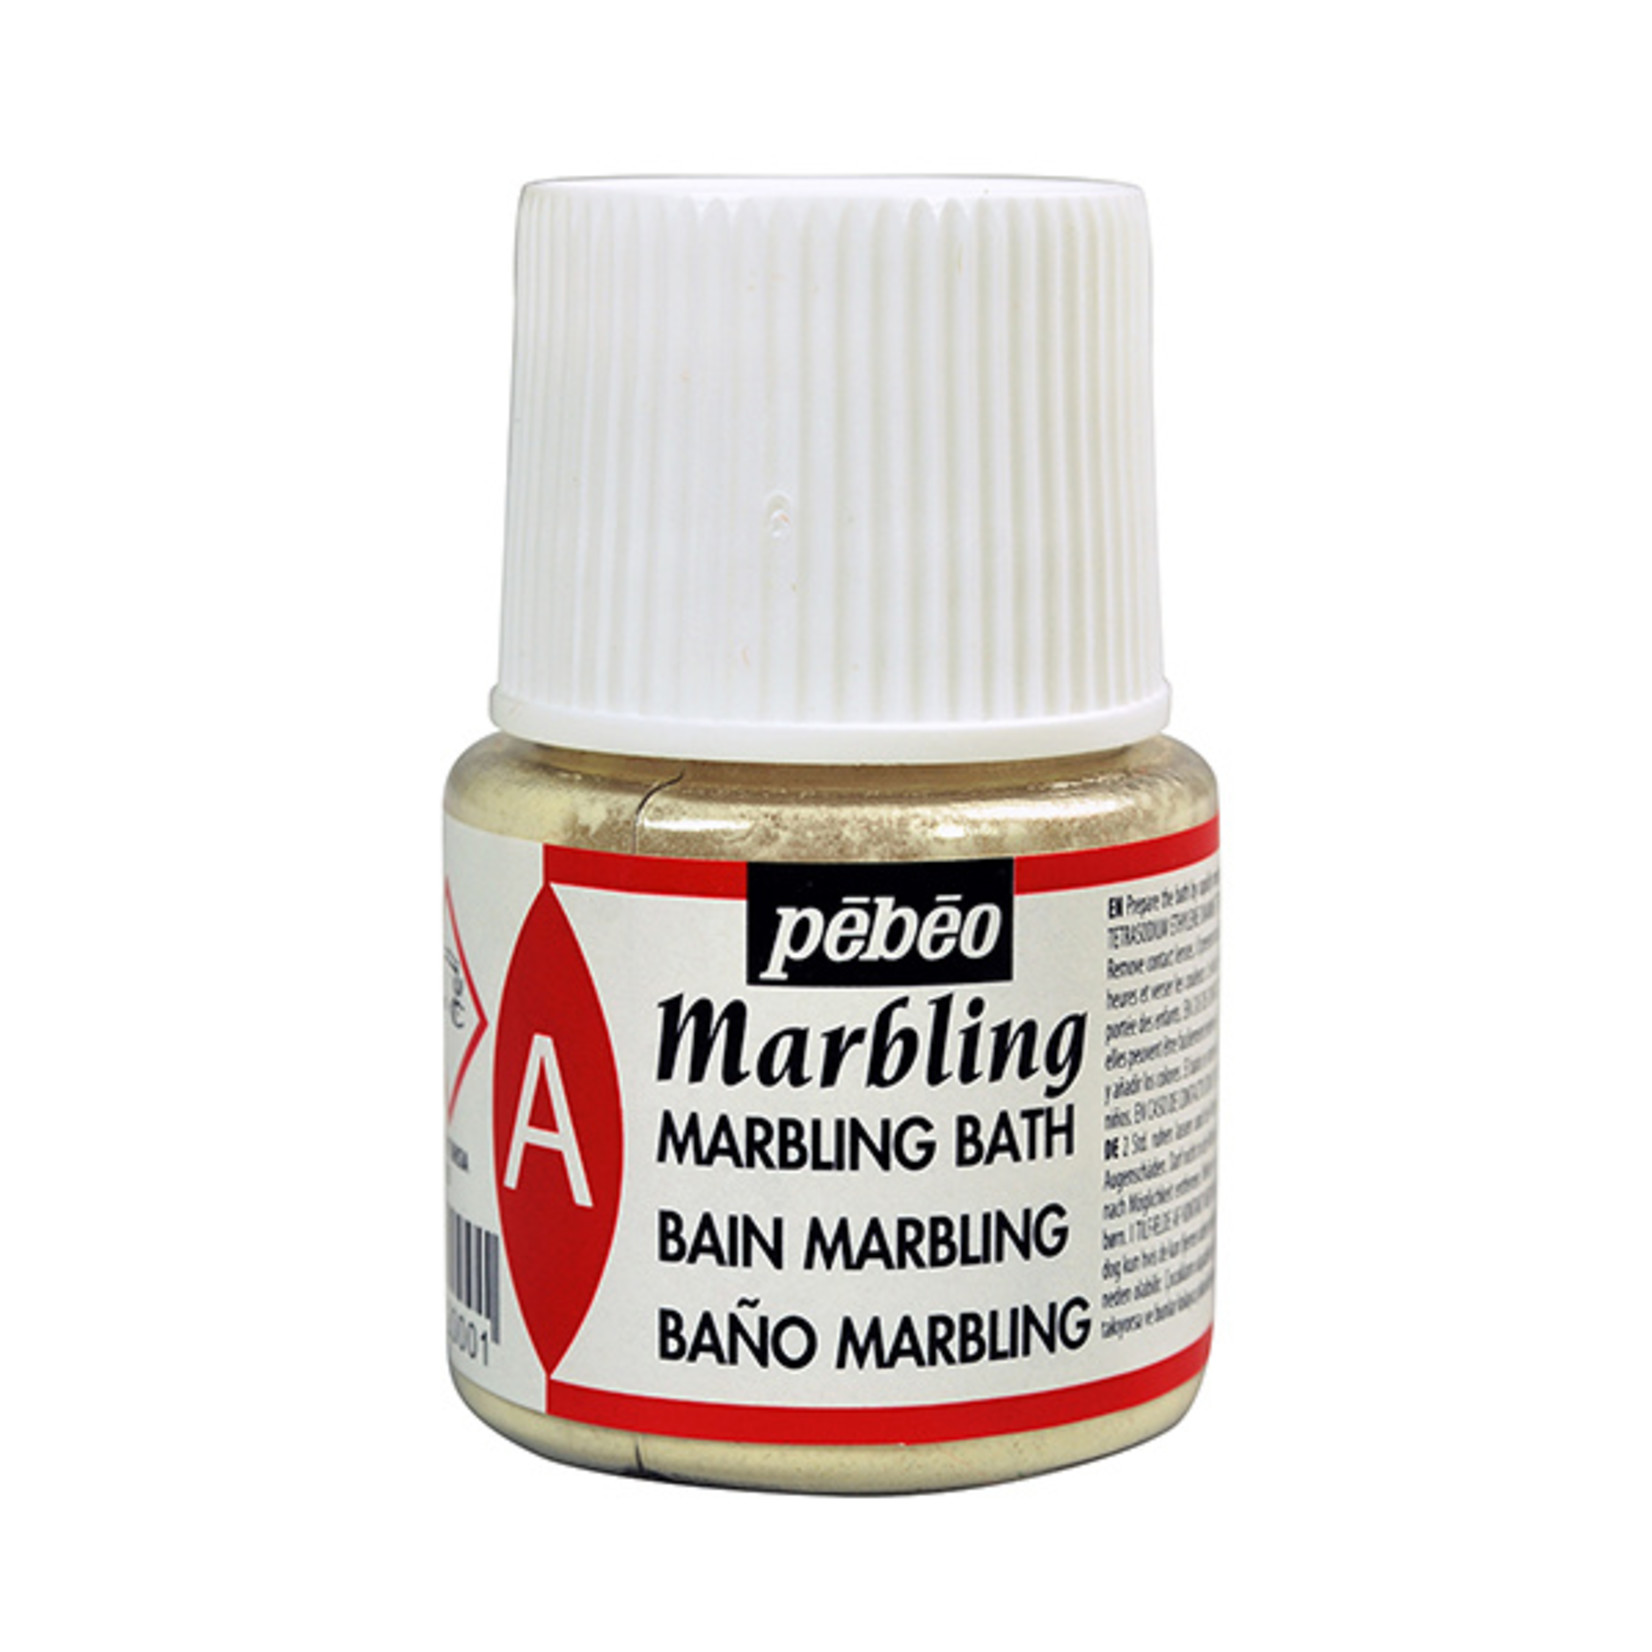 PEBEO MARBLING BATH 35G